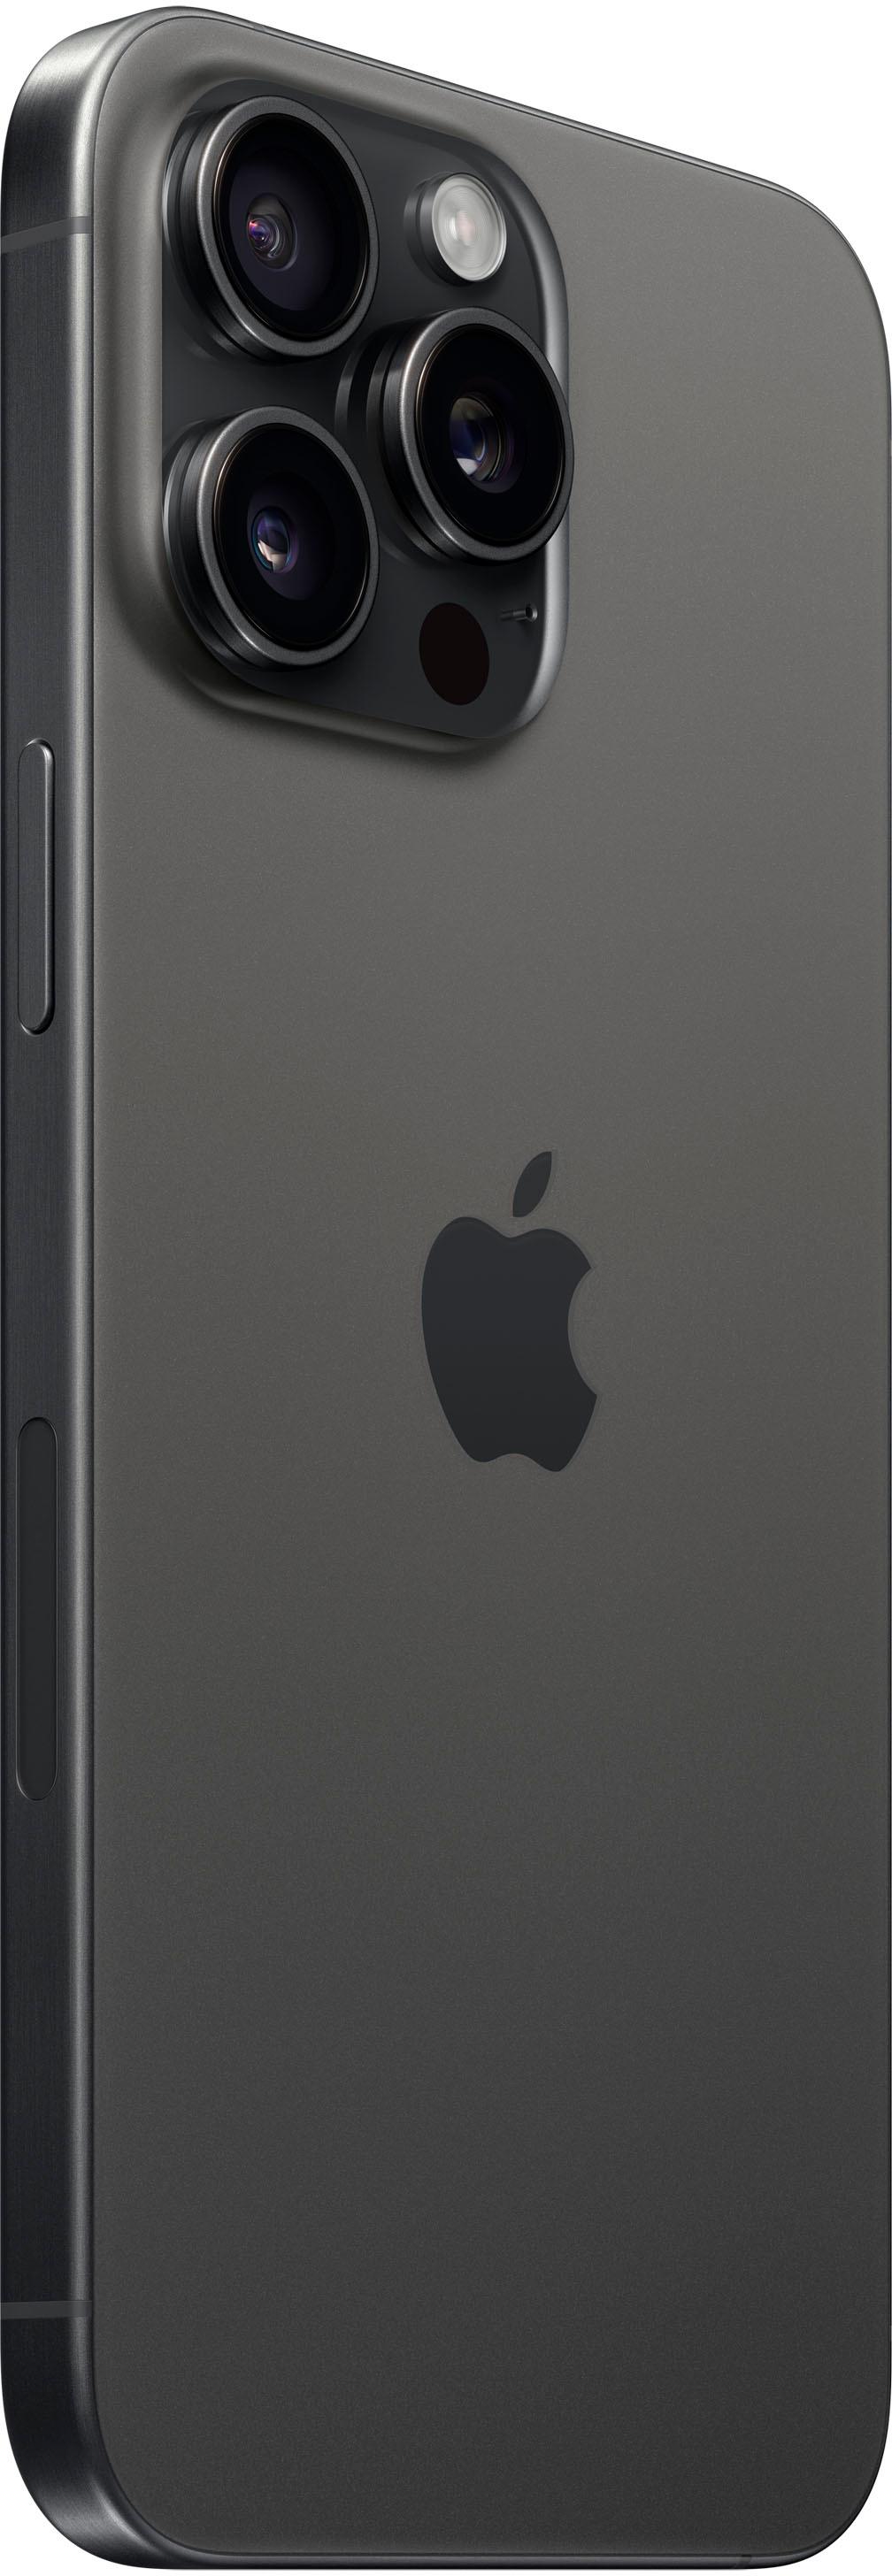 Apple iPhone 15 Pro Max 256GB White Titanium (Verizon) MU673LL/A - Best Buy